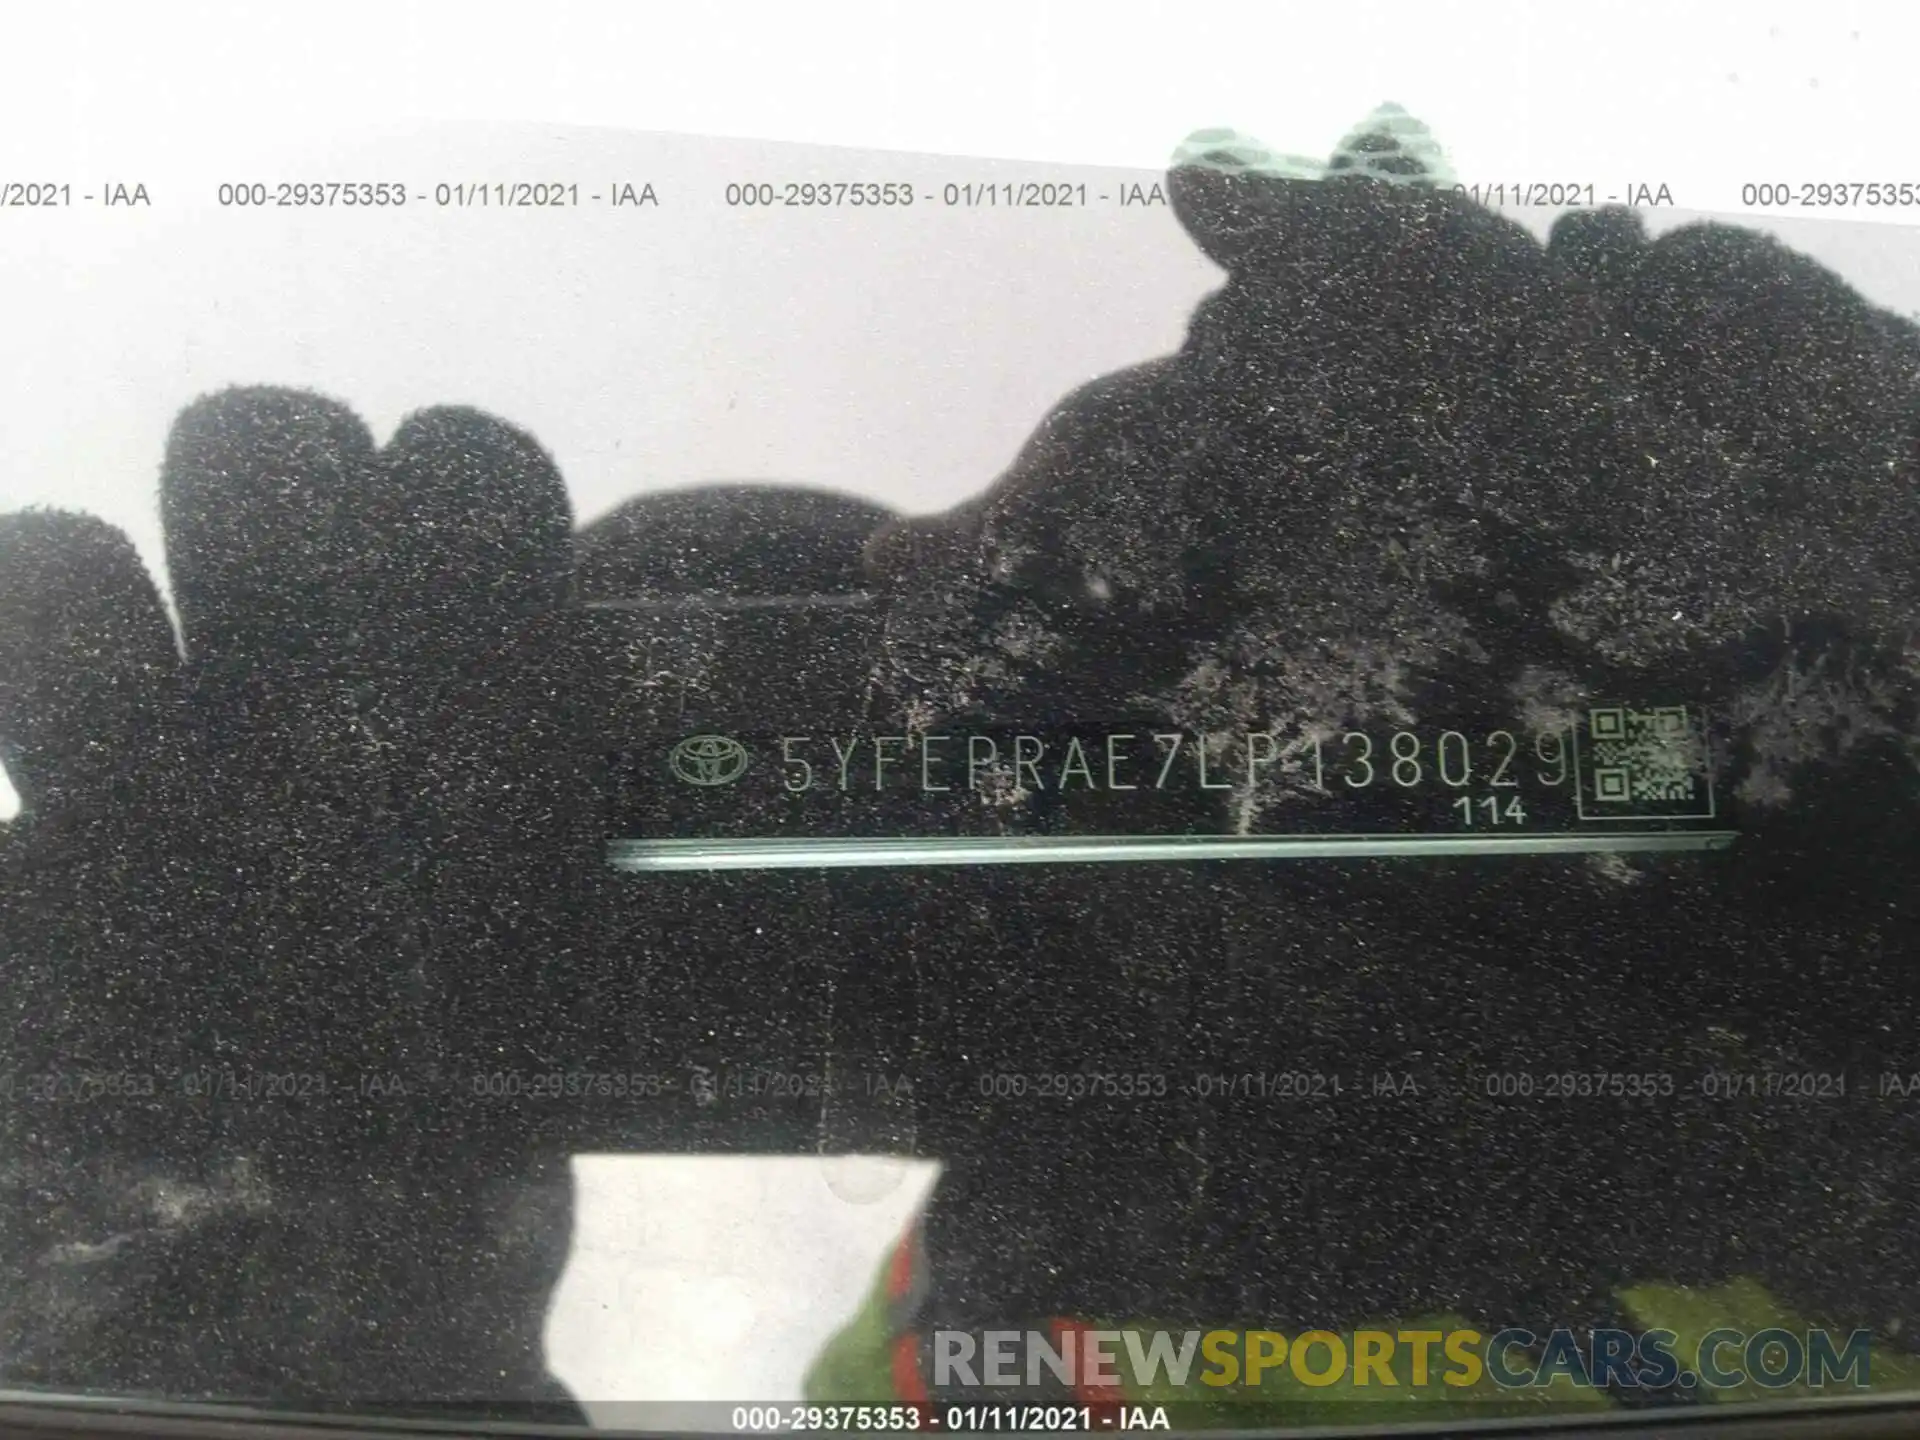 9 Photograph of a damaged car 5YFEPRAE7LP138029 TOYOTA COROLLA 2020